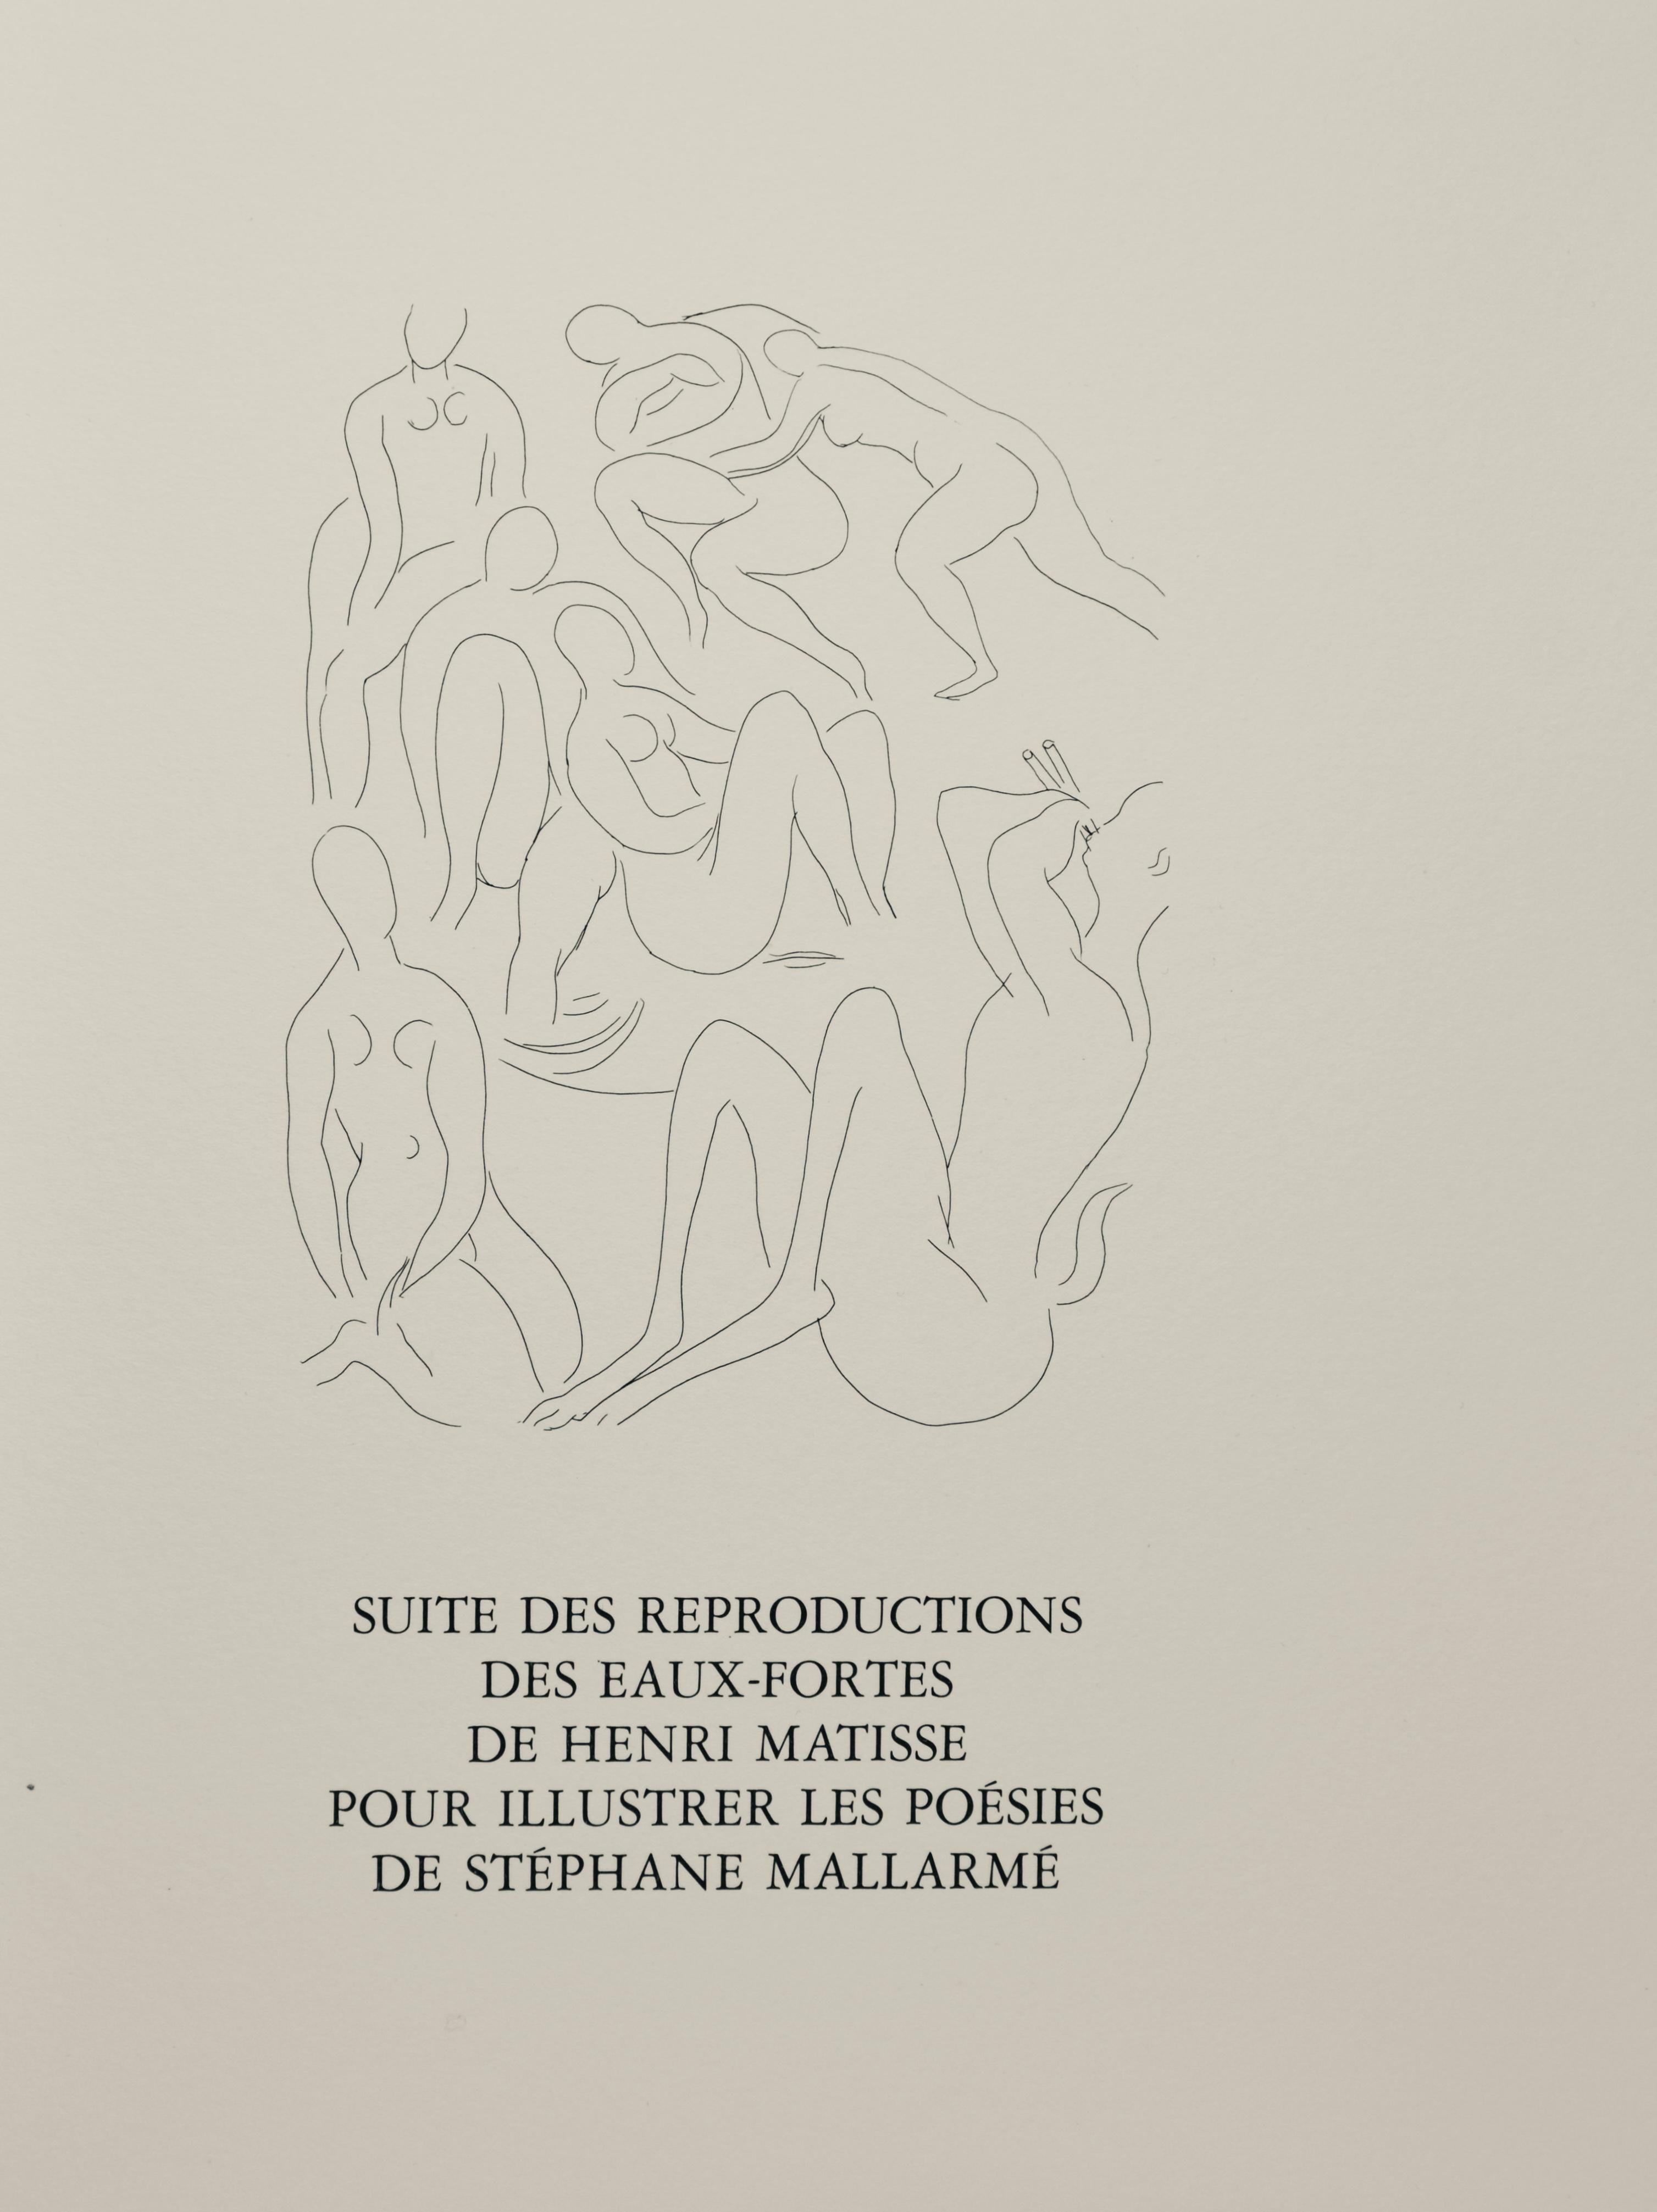 Matisse, Eventail de Madame Mallarmé (Madame Mallarmé's Fan), Poésies (after) For Sale 3